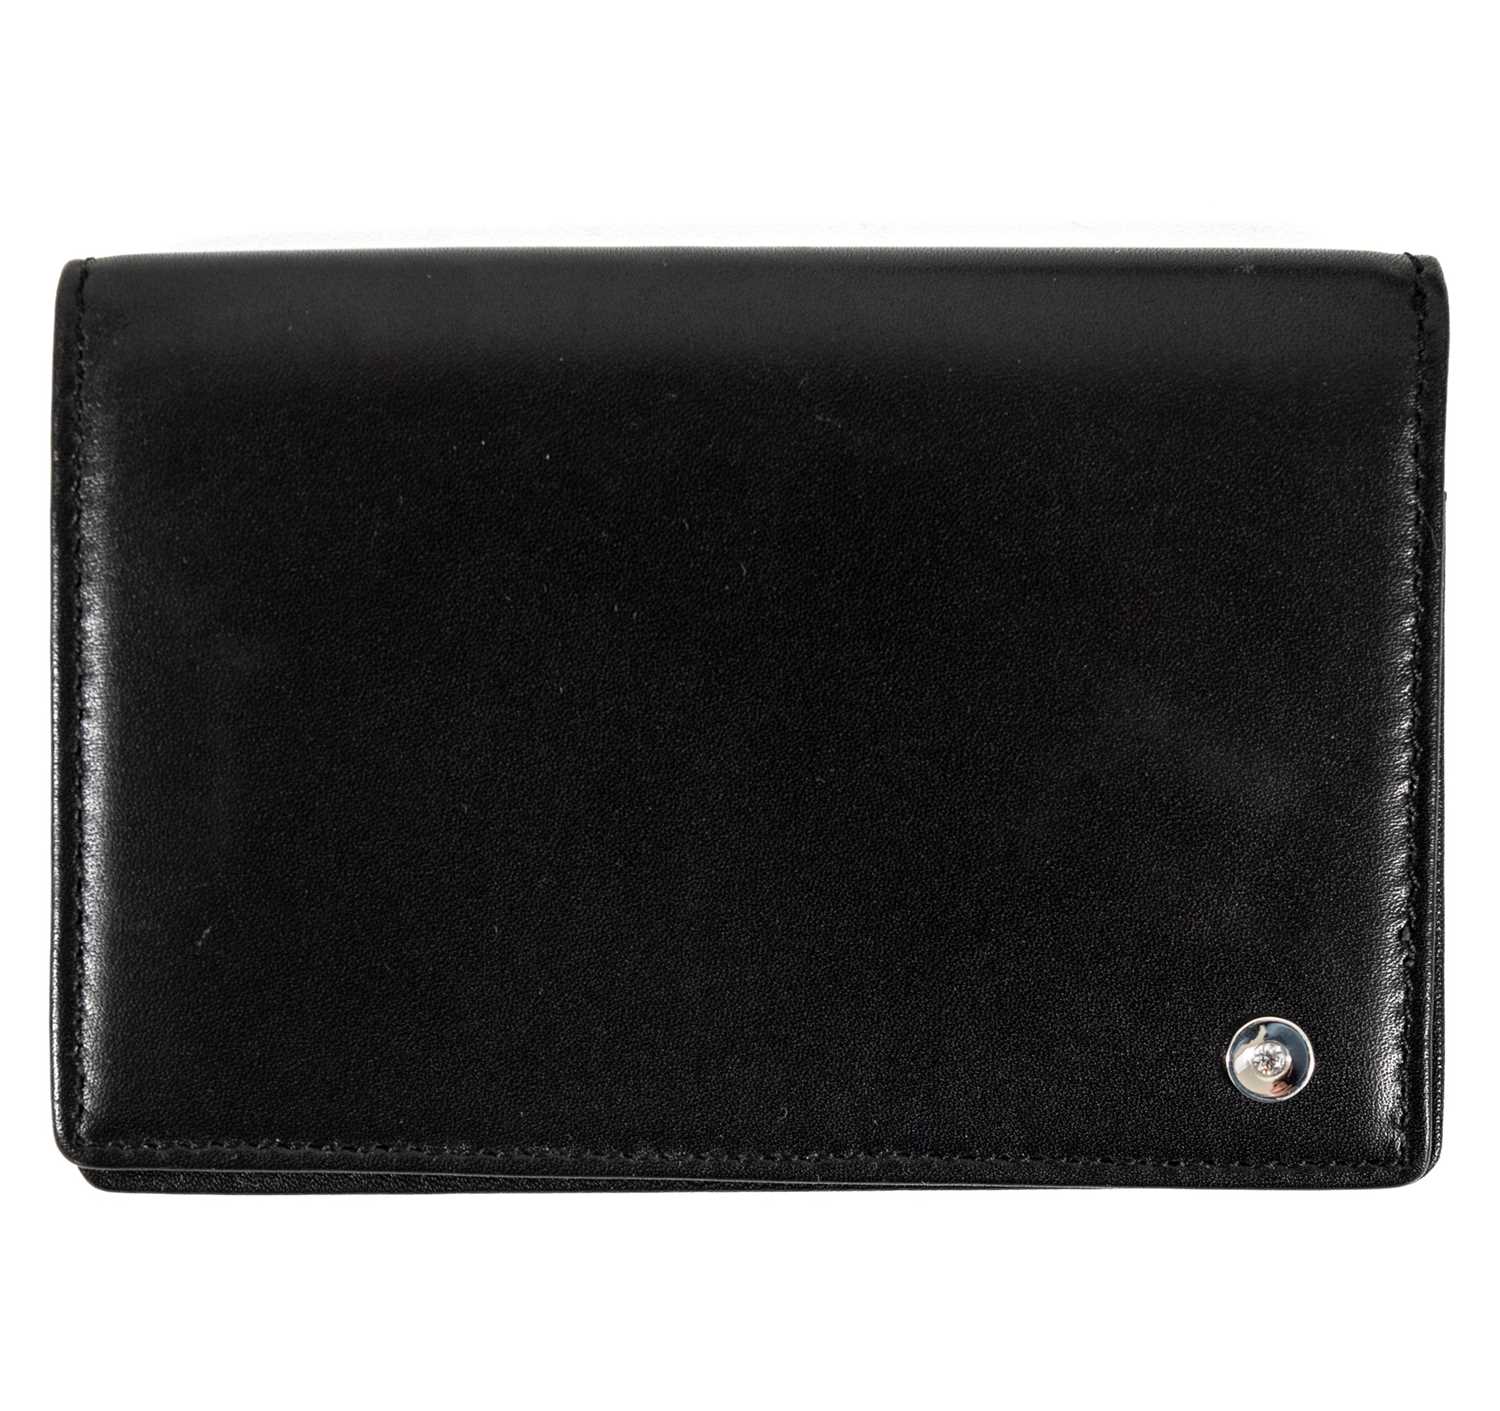 A Le Lumiere `Diamonds of Light` range black leather wallet, set with a VS diamond.